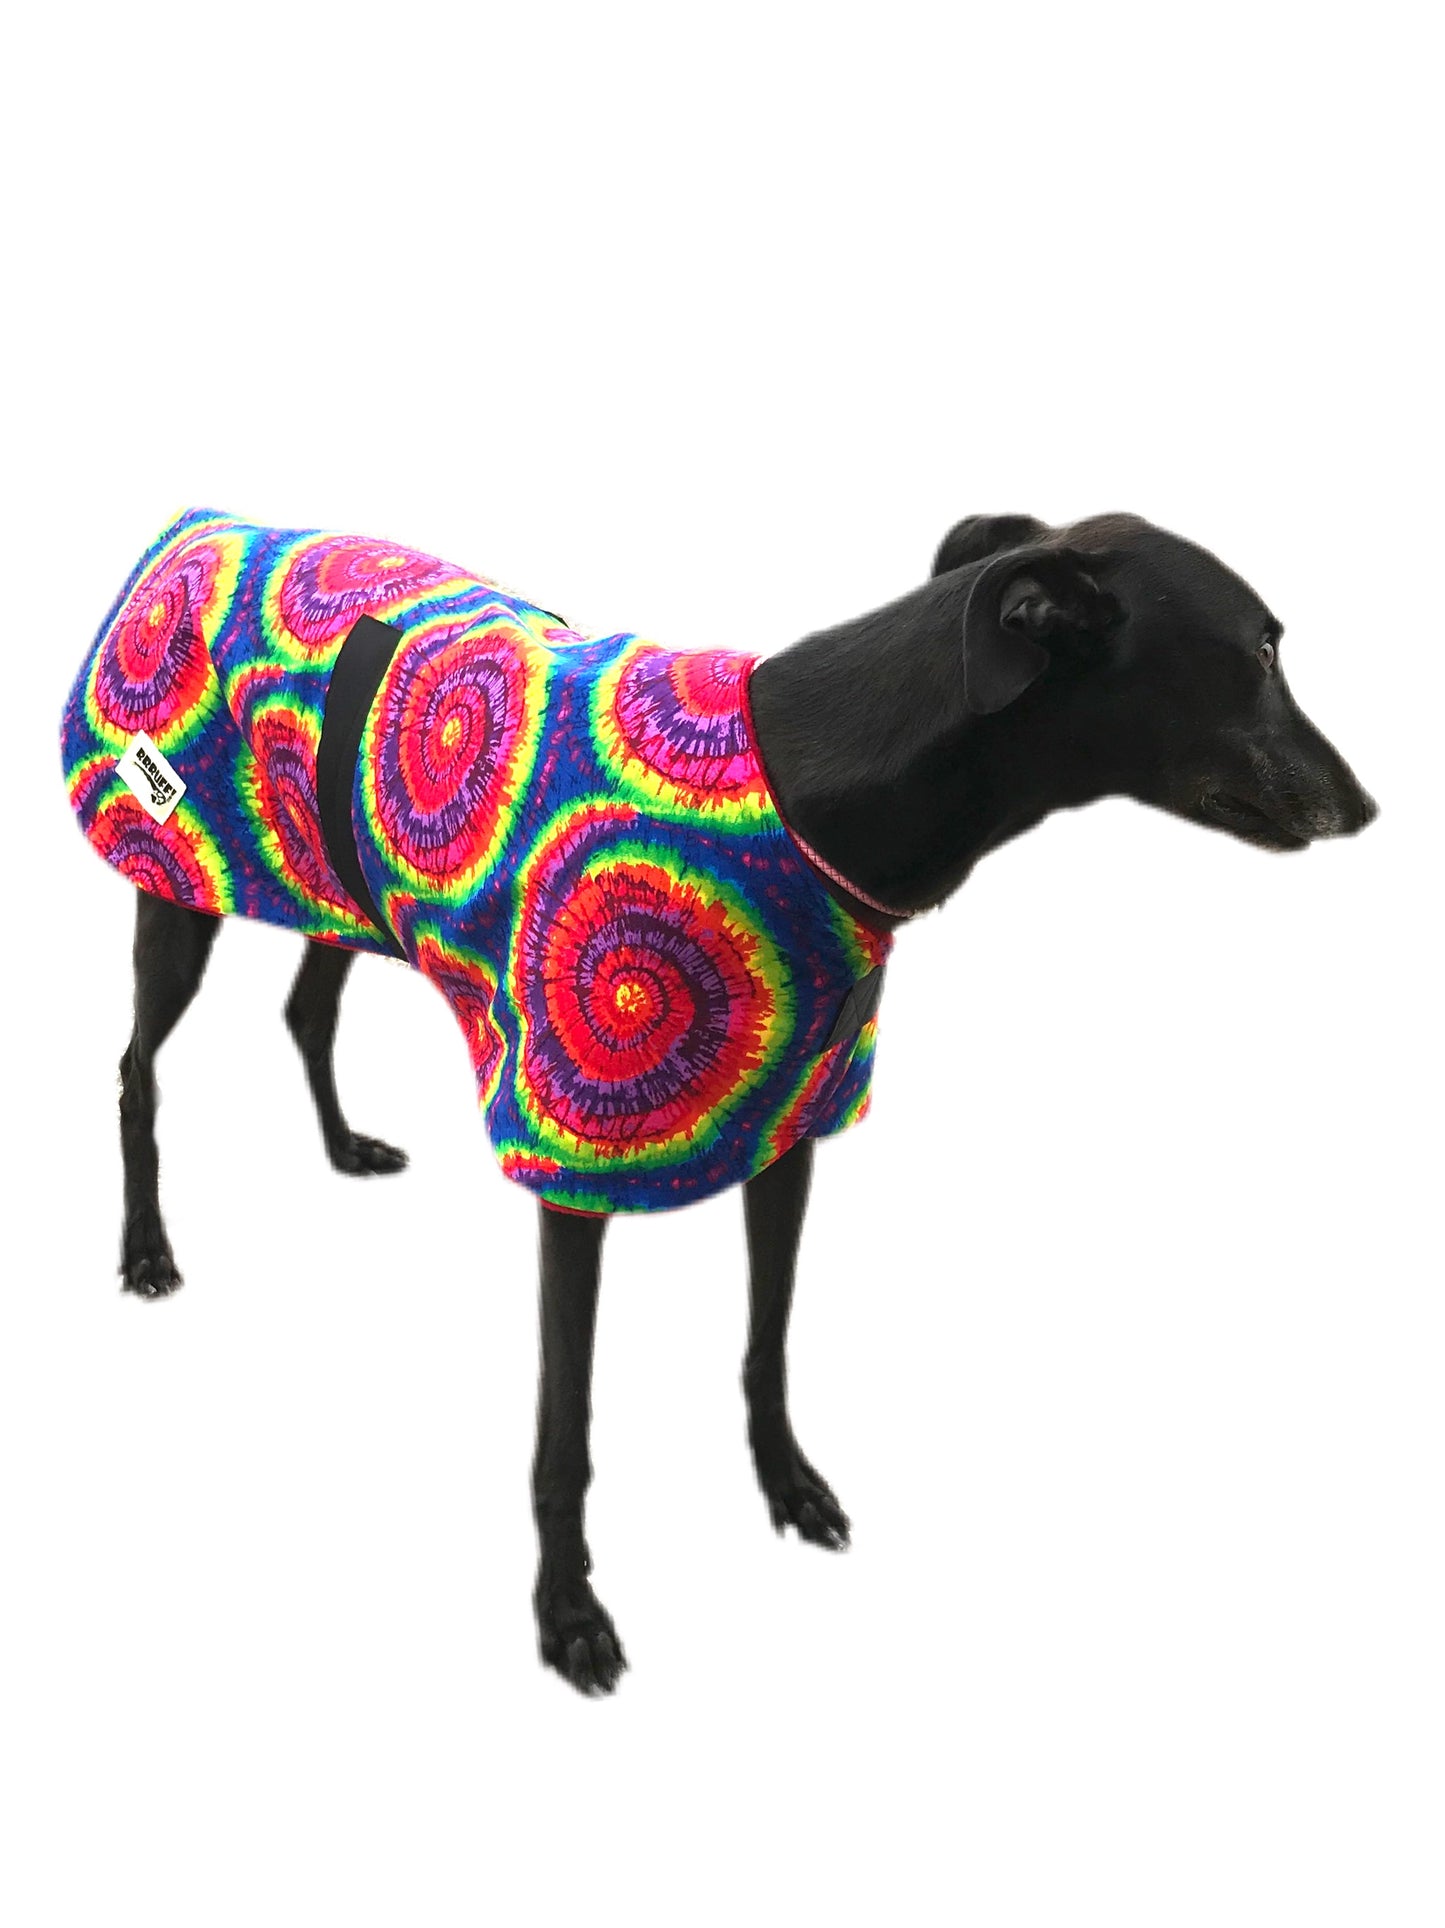 Vivid Greyhound ‘retro’ autumn coat in cotton & plush fleece washable